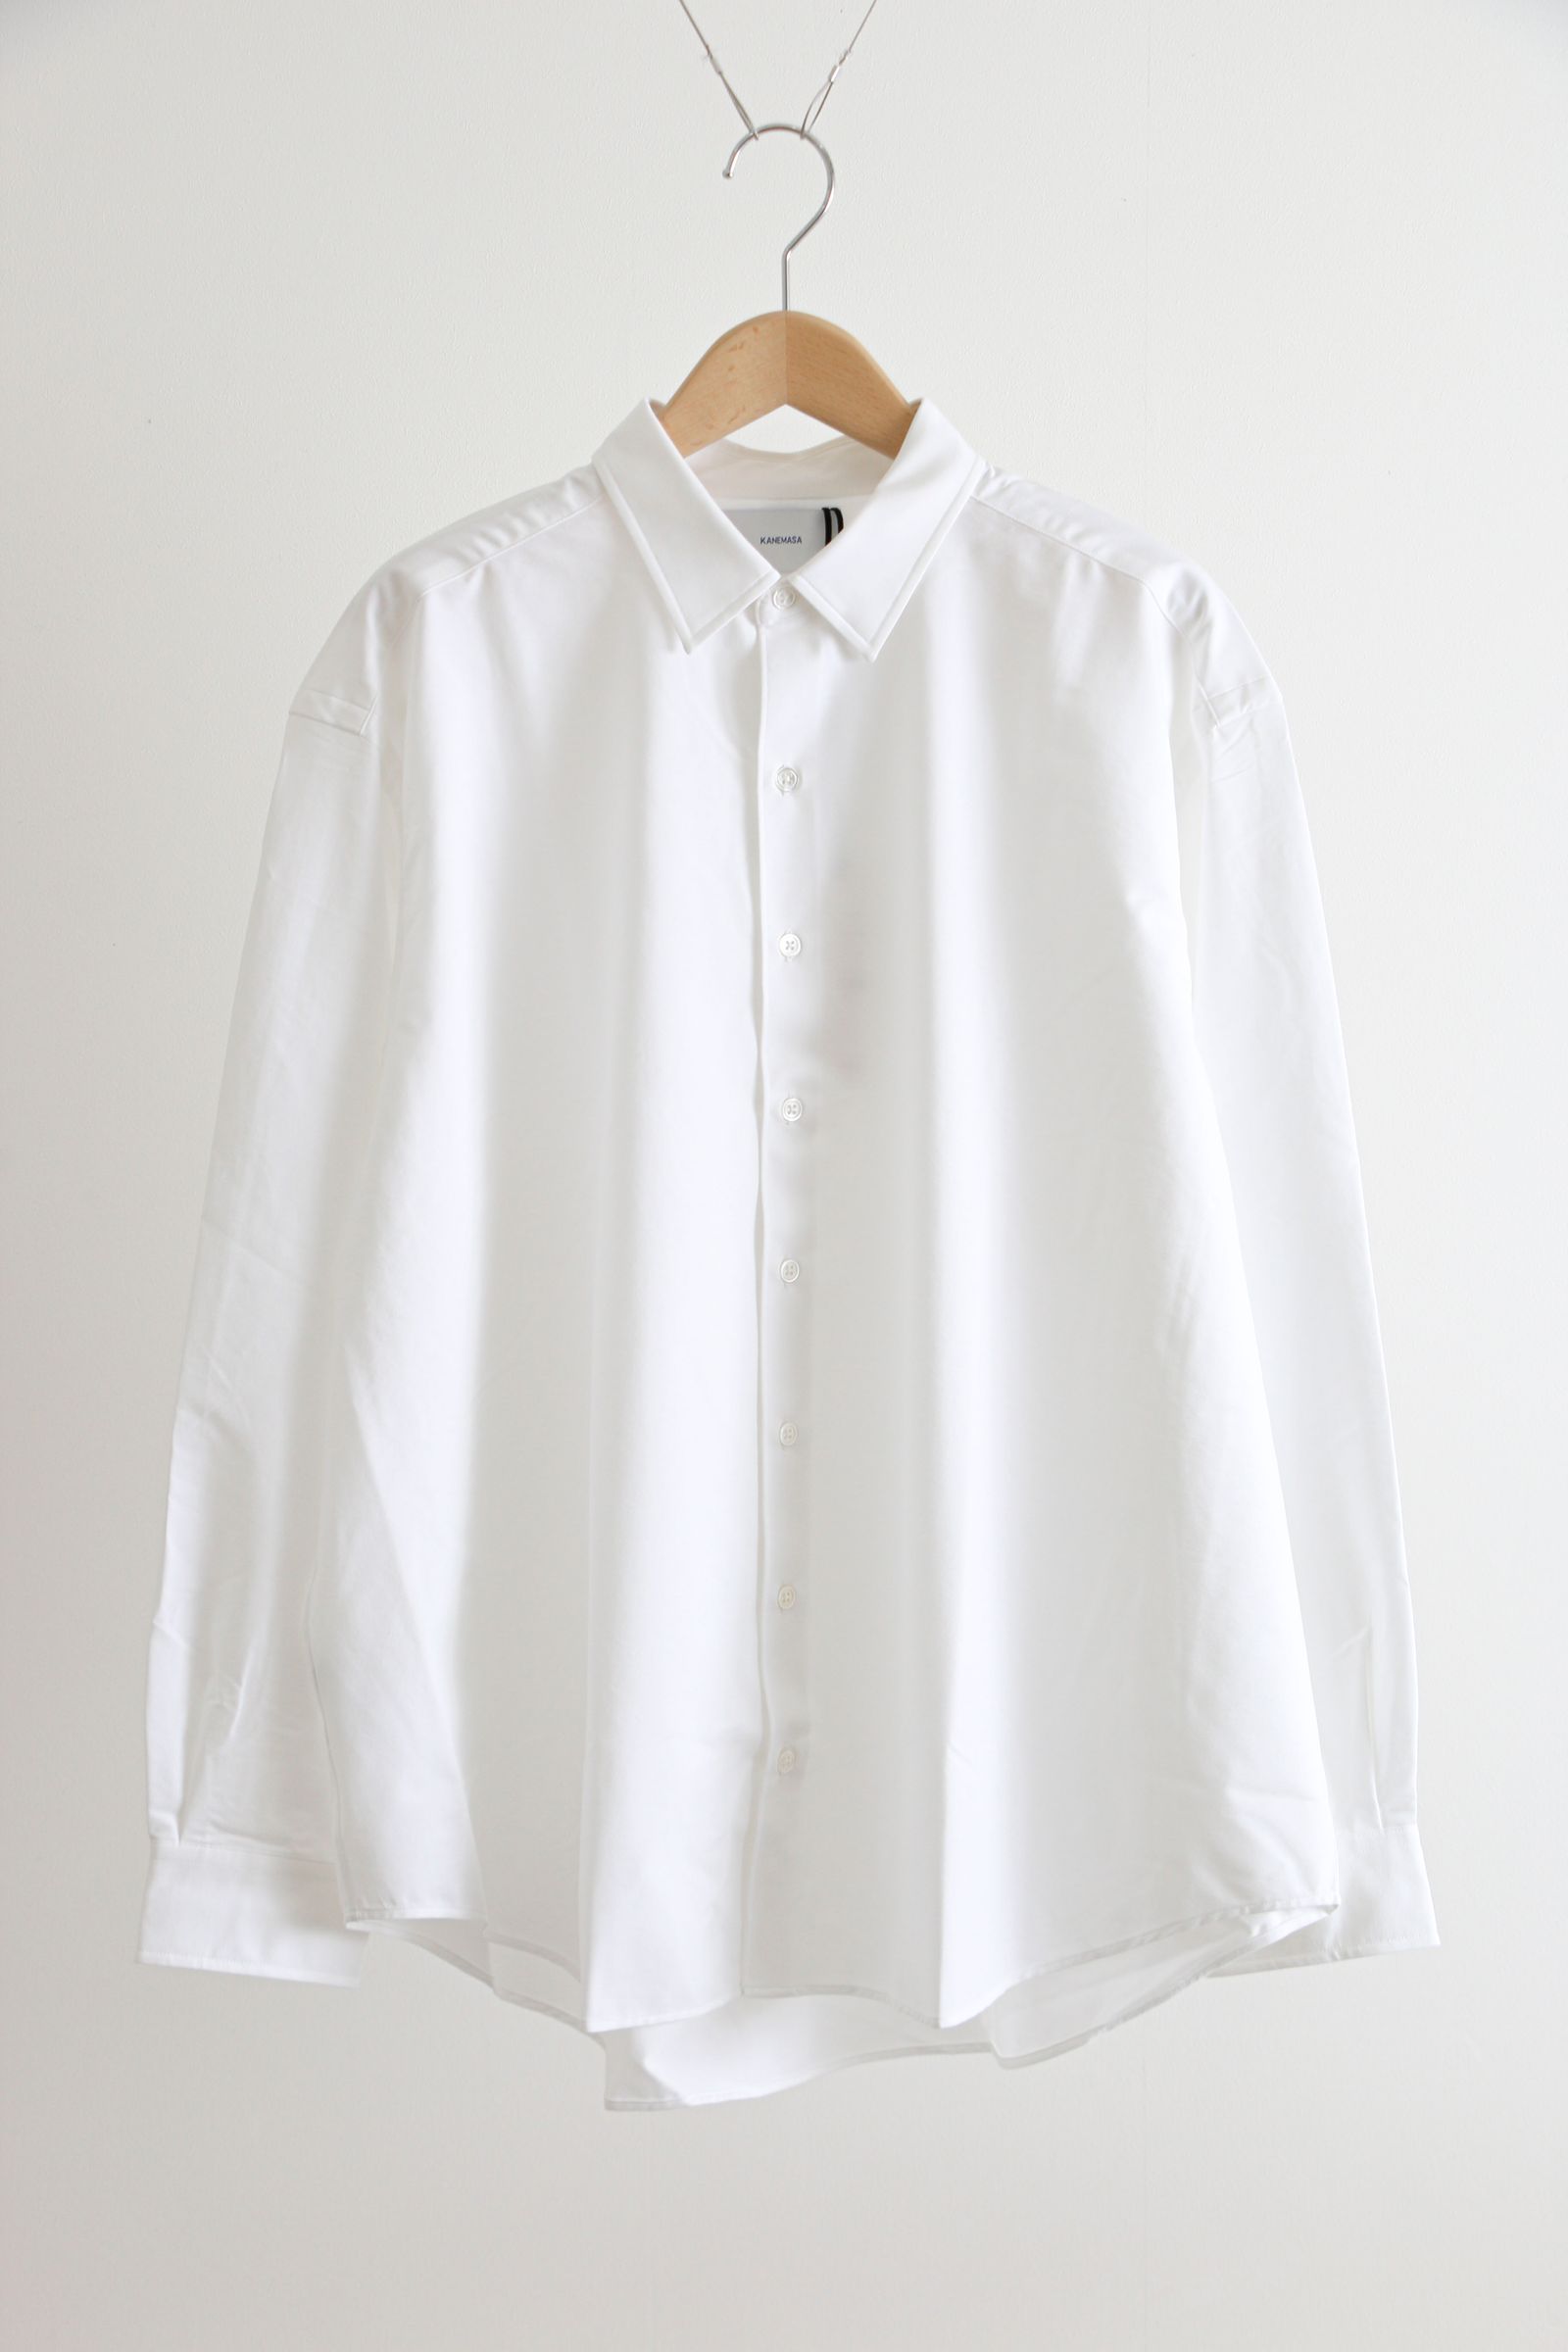 KANEMASA PHIL. - Royal Ox Dress Jersey Shirt WHITE / シャツ / | koko